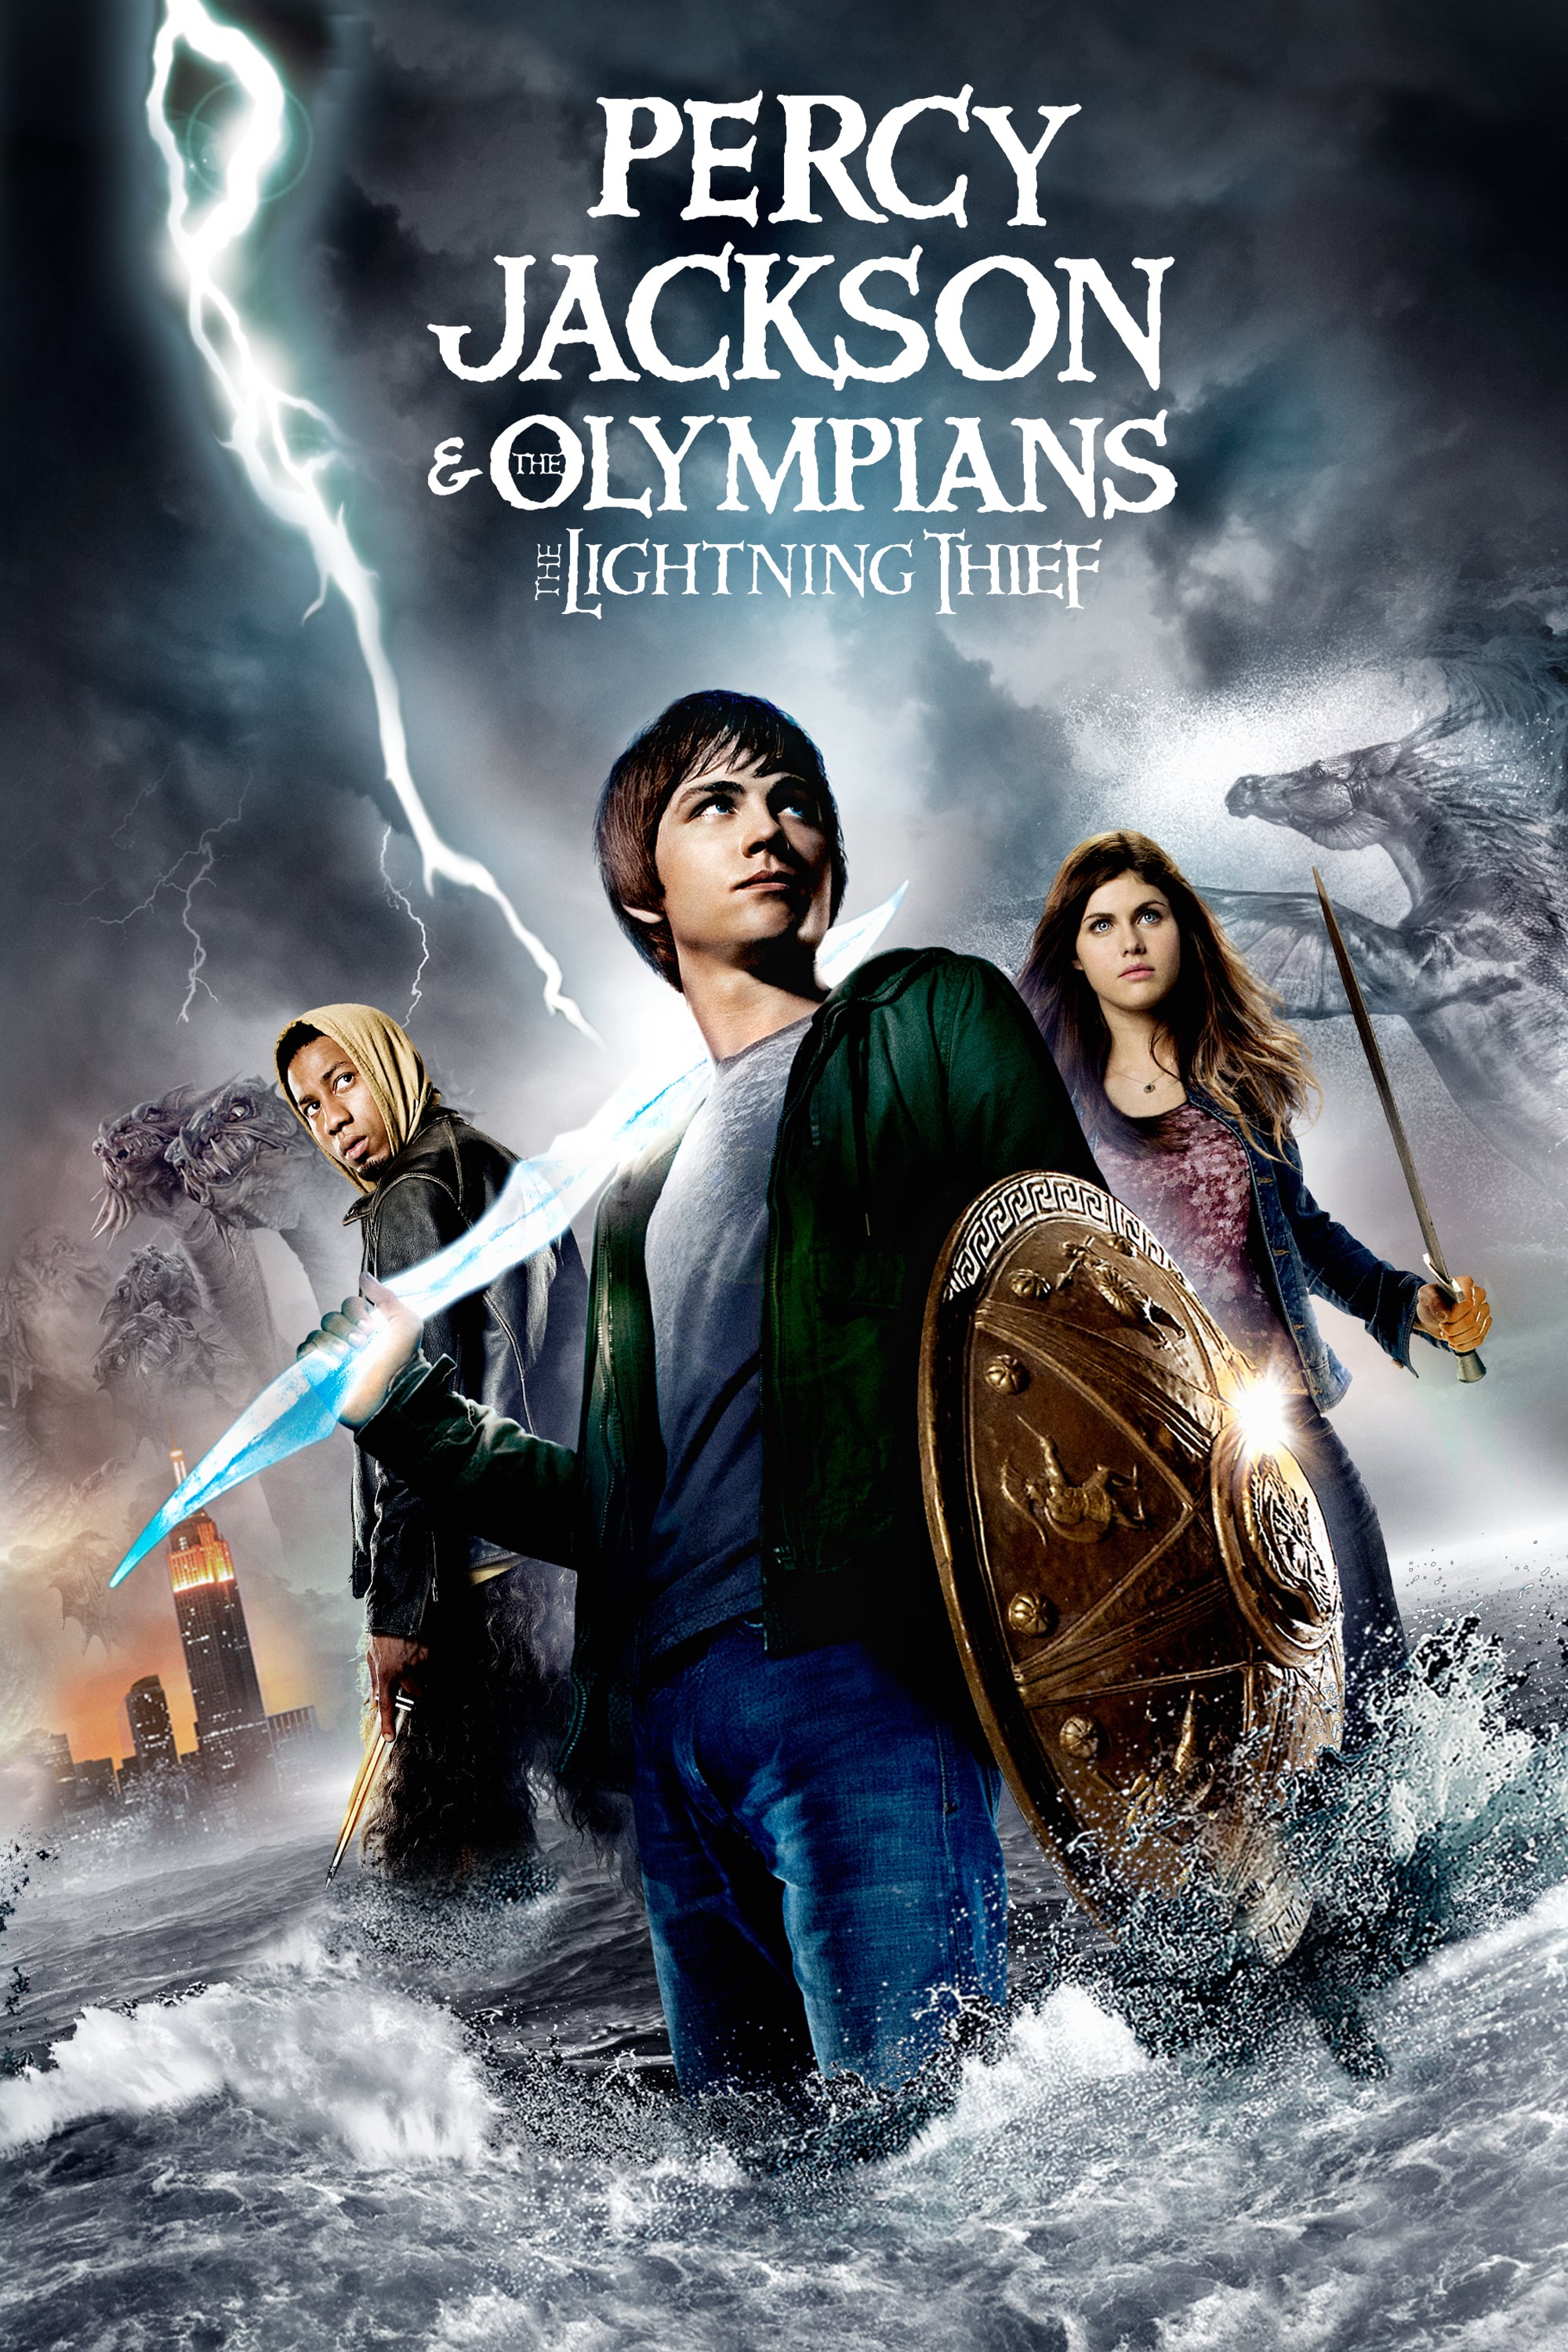 Stiahni si Filmy CZ/SK dabing Percy Jackson: Zlodej blesku/Percy Jackson & the Olympians: The Lightning Thief  (2010)(CZ/EN) = CSFD 57%